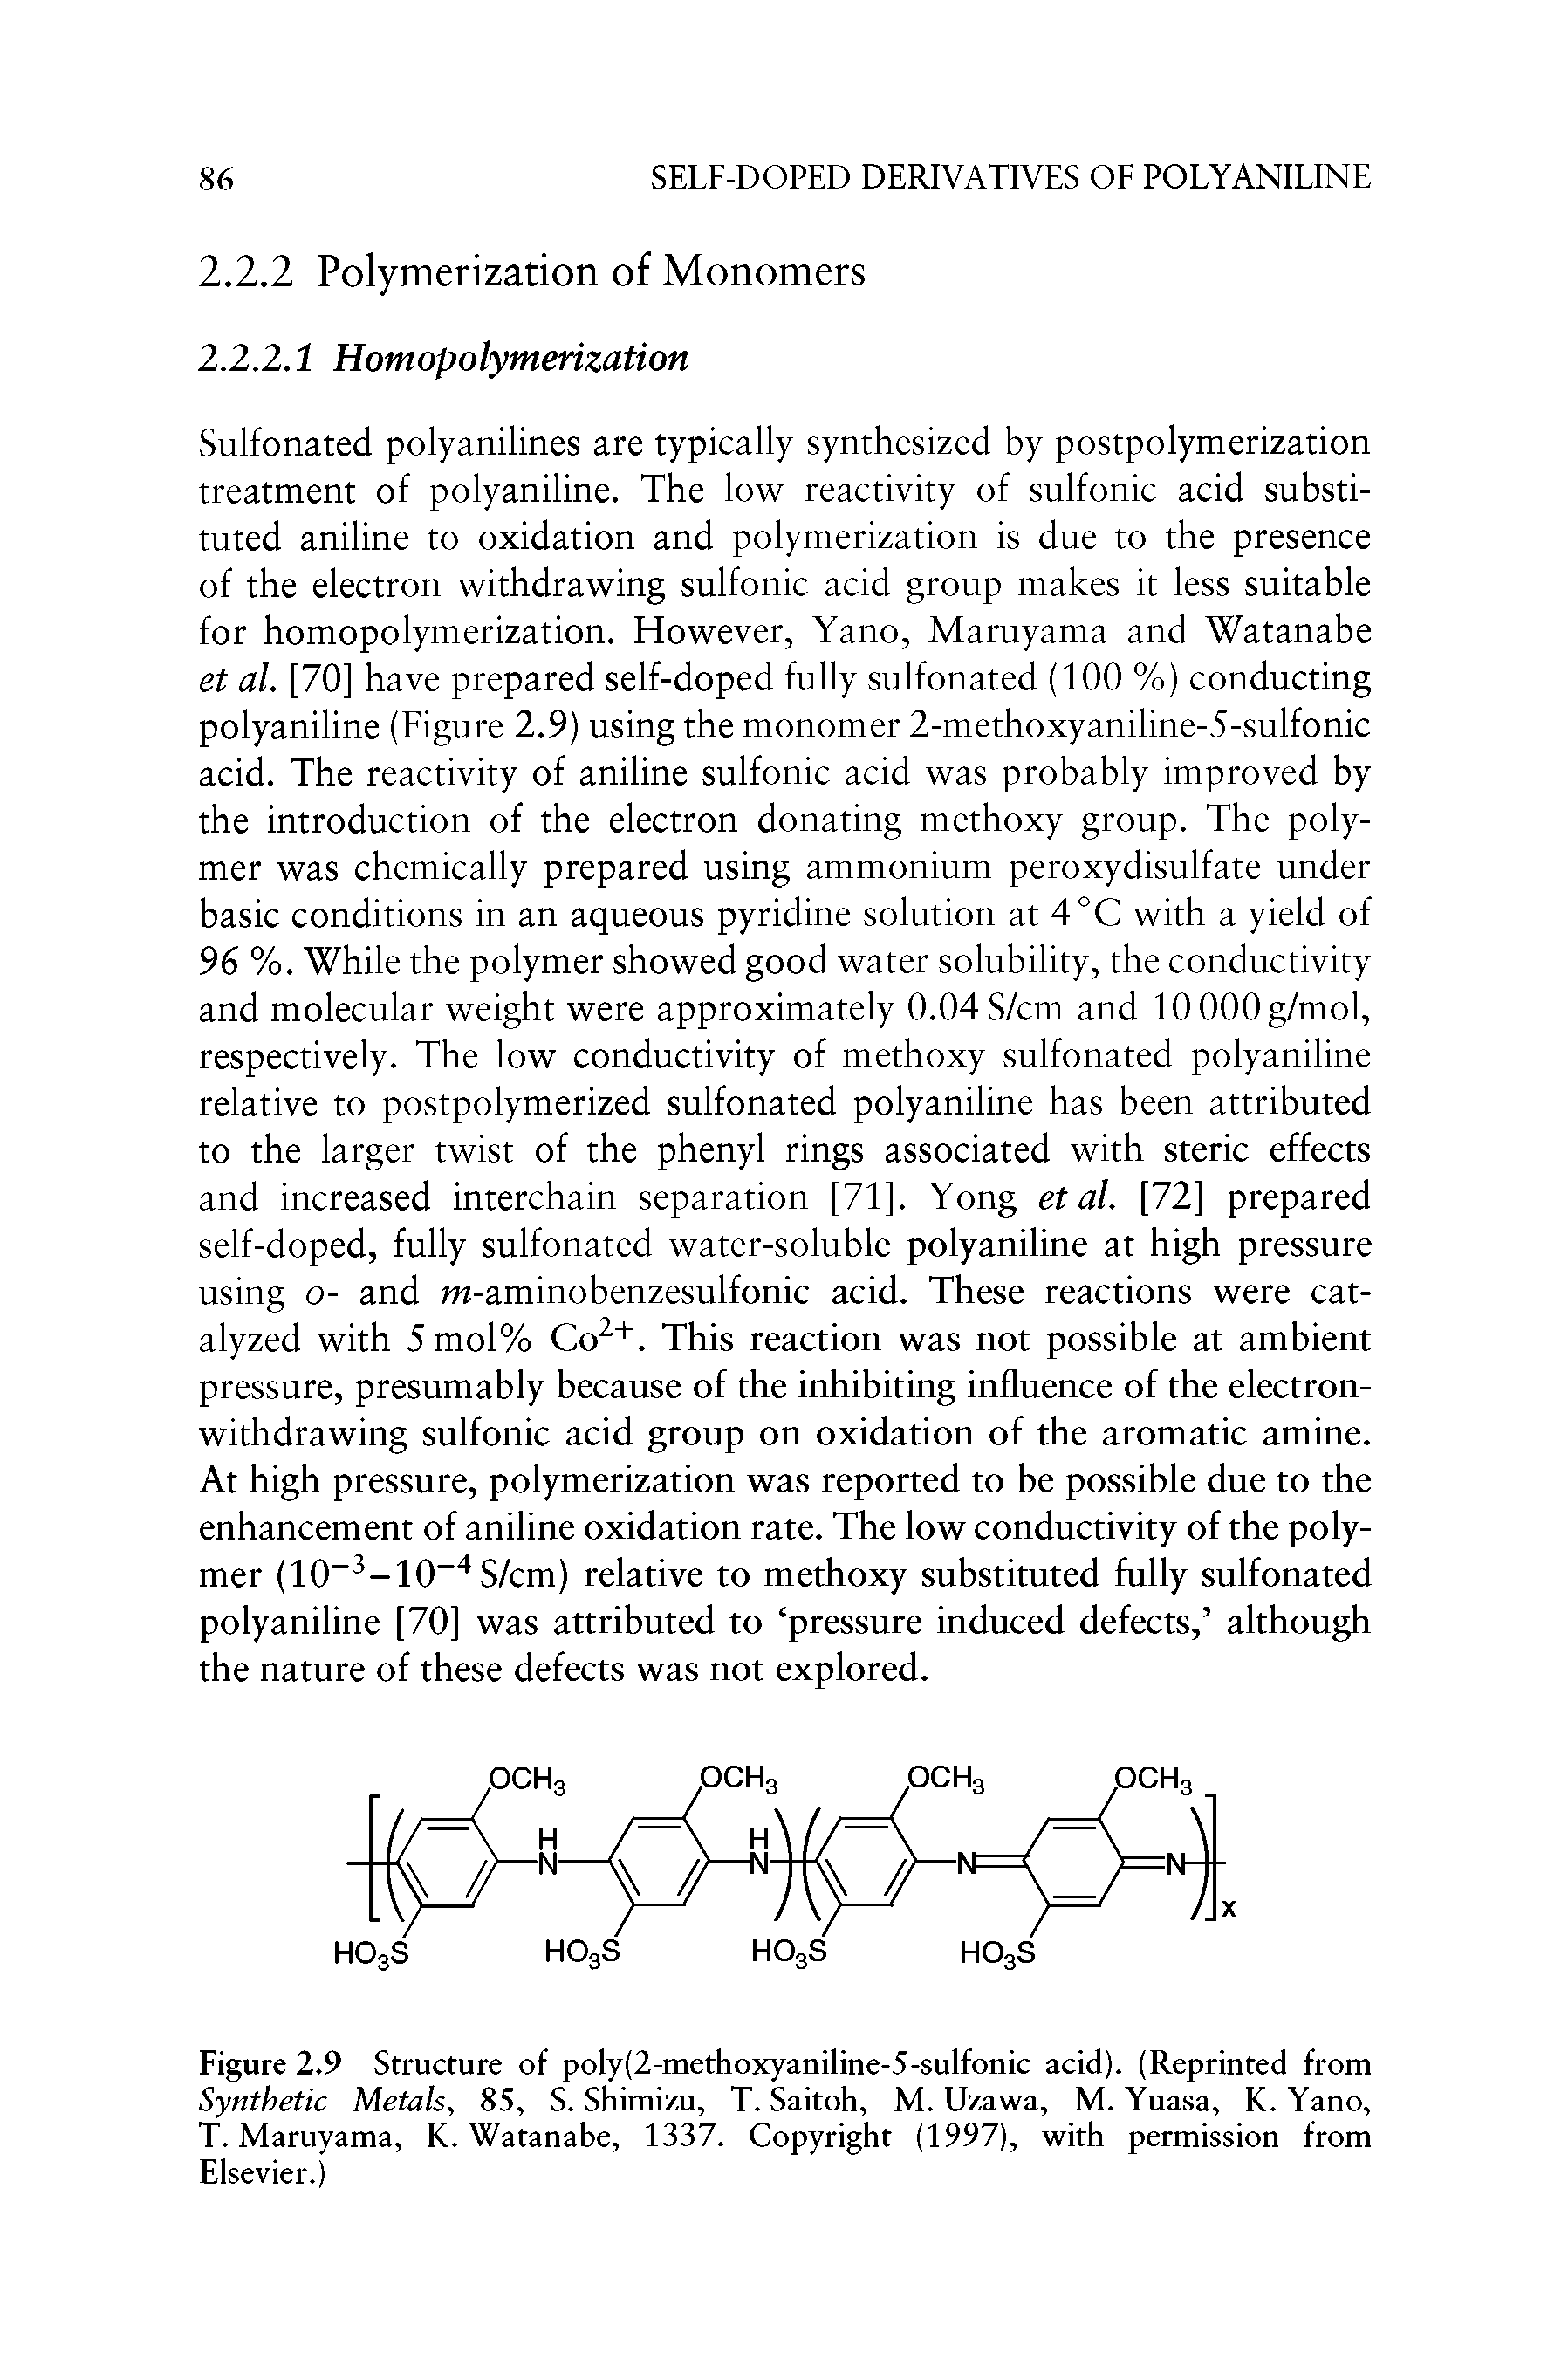 Figure 2.9 Structure of poly(2-methoxyaniline-5-sulfonic acid). (Reprinted from Synthetic Metals, 85, S. Shimizu, T. Saitoh, M. Uzawa, M. Yuasa, K. Yano, T. Maruyama, K. Watanabe, 1337. Copyright (1997), with permission from Elsevier.)...